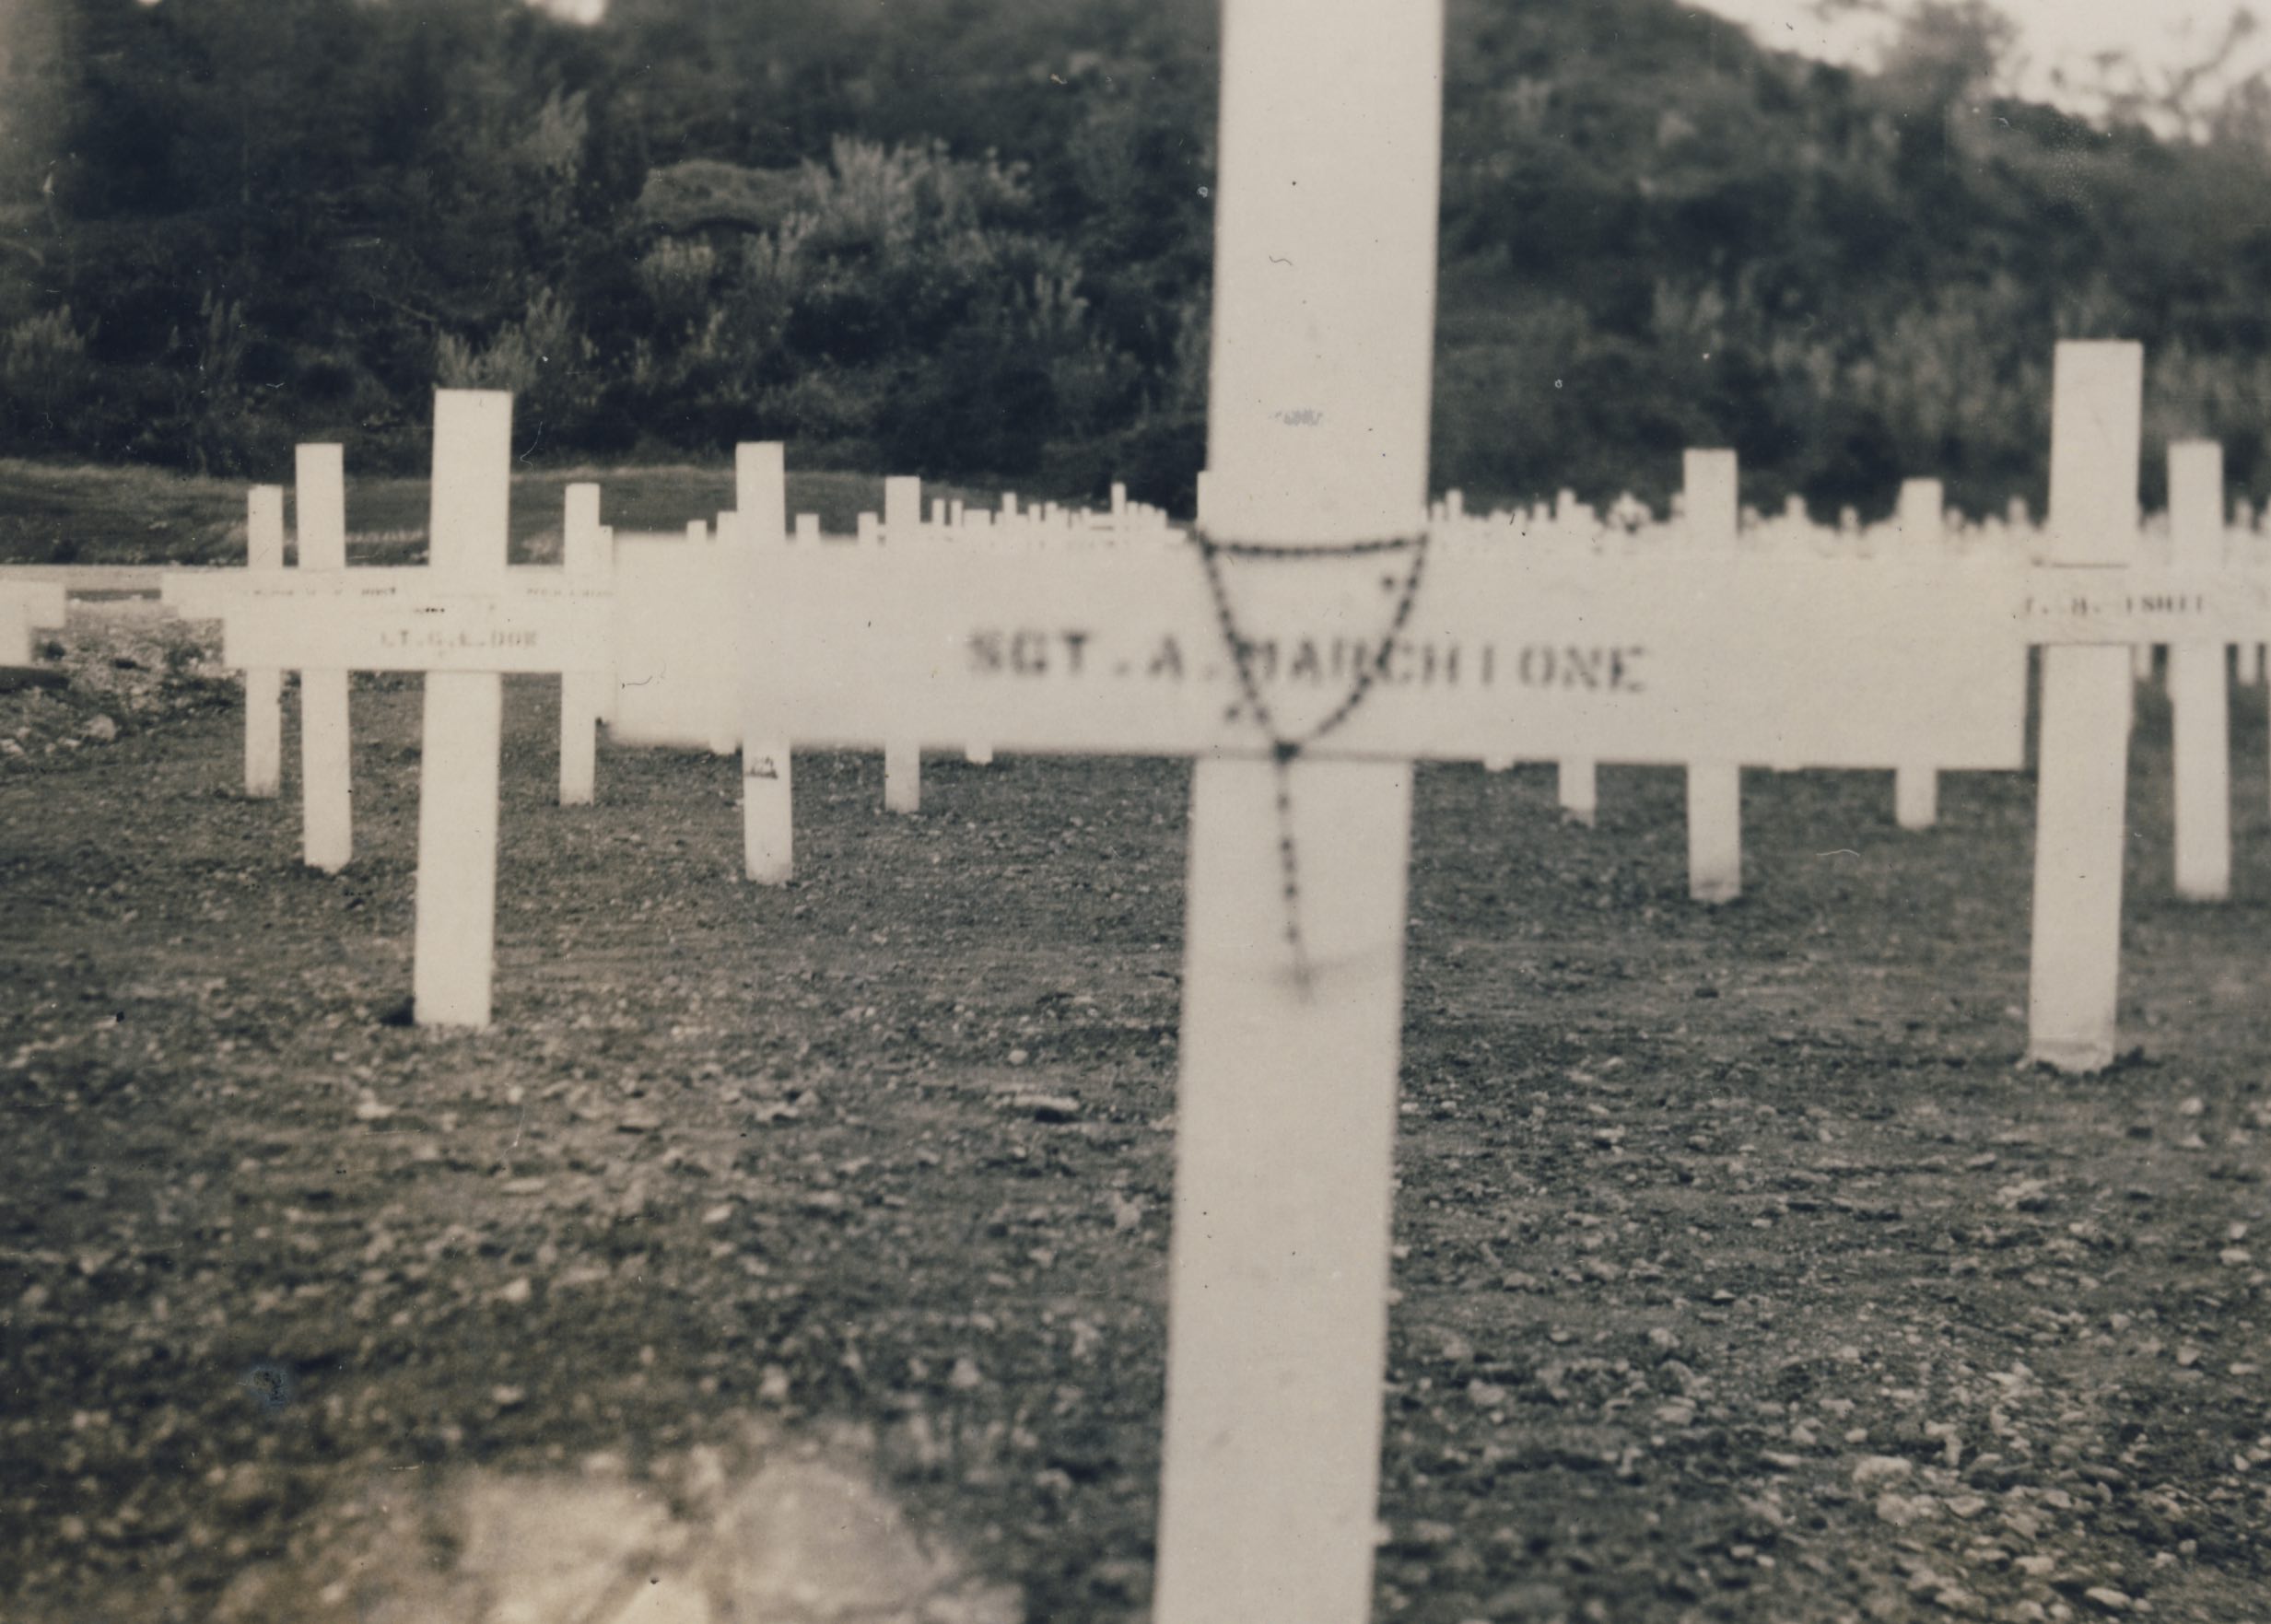 Tony Marchione's grave. Courtesy photo.